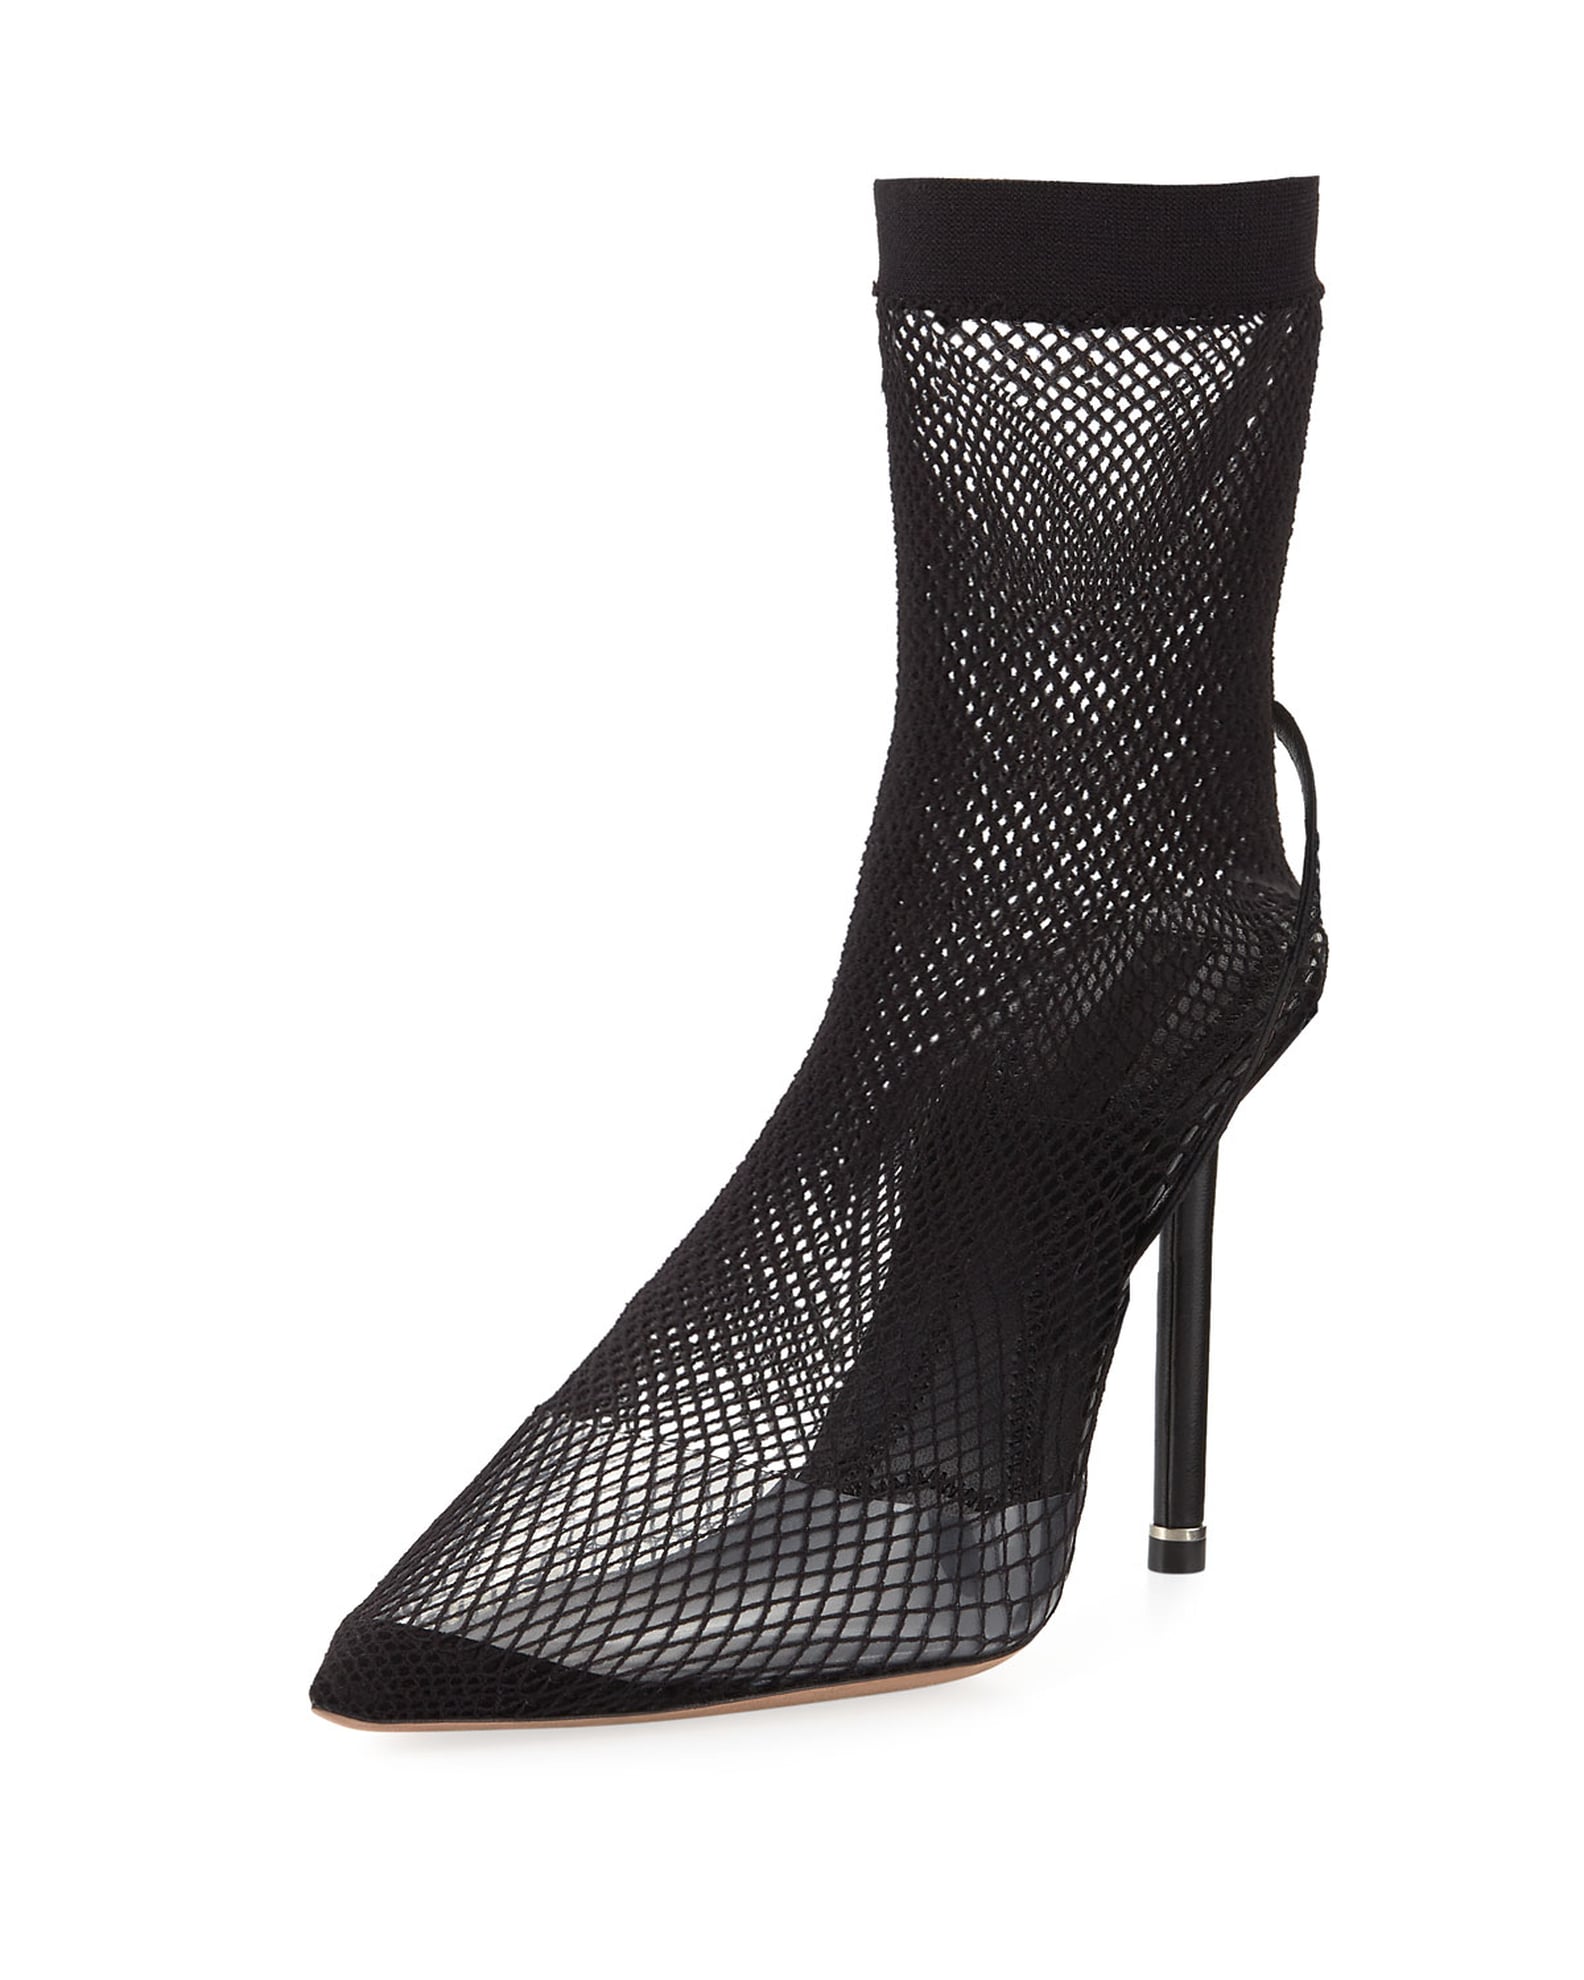 Bella Hadid's Dior Lace-Up Black Boots | POPSUGAR Fashion